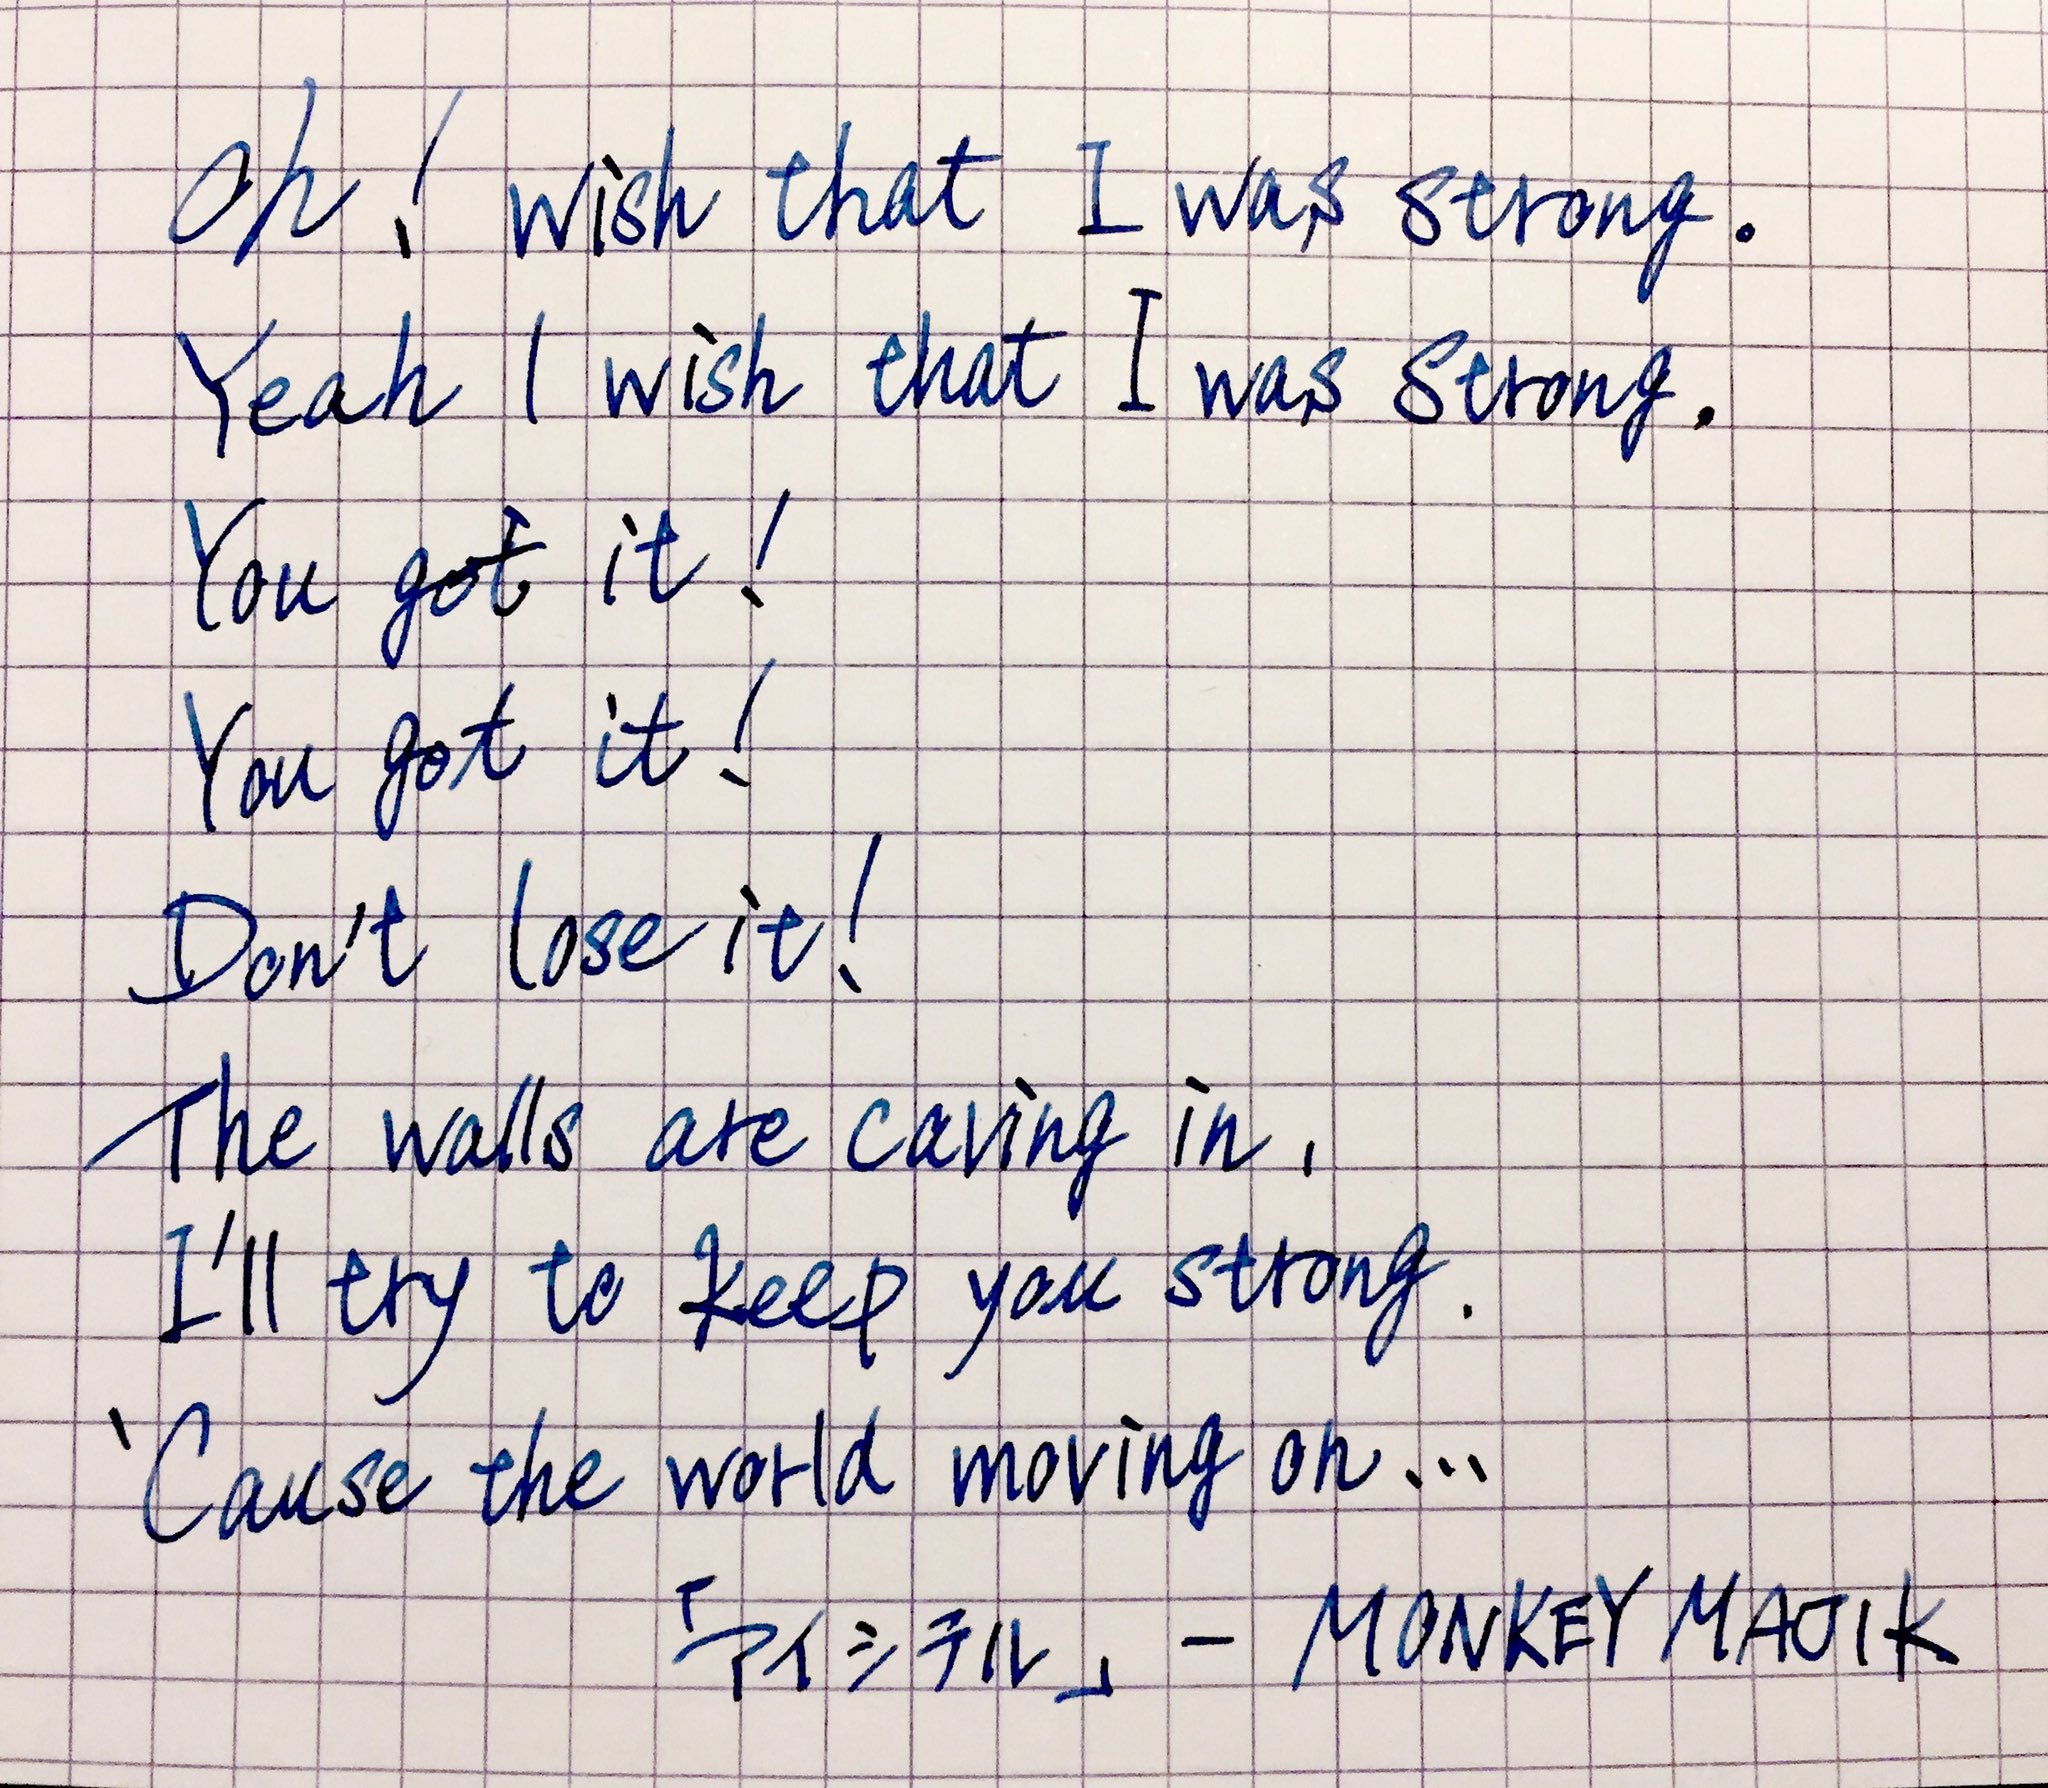 Lorry Rolly Monkey Majikの アイシテル のラストを書きました 2枚目は拾ってきた和訳です Monkeymajik アイシテル 歌詞手書き